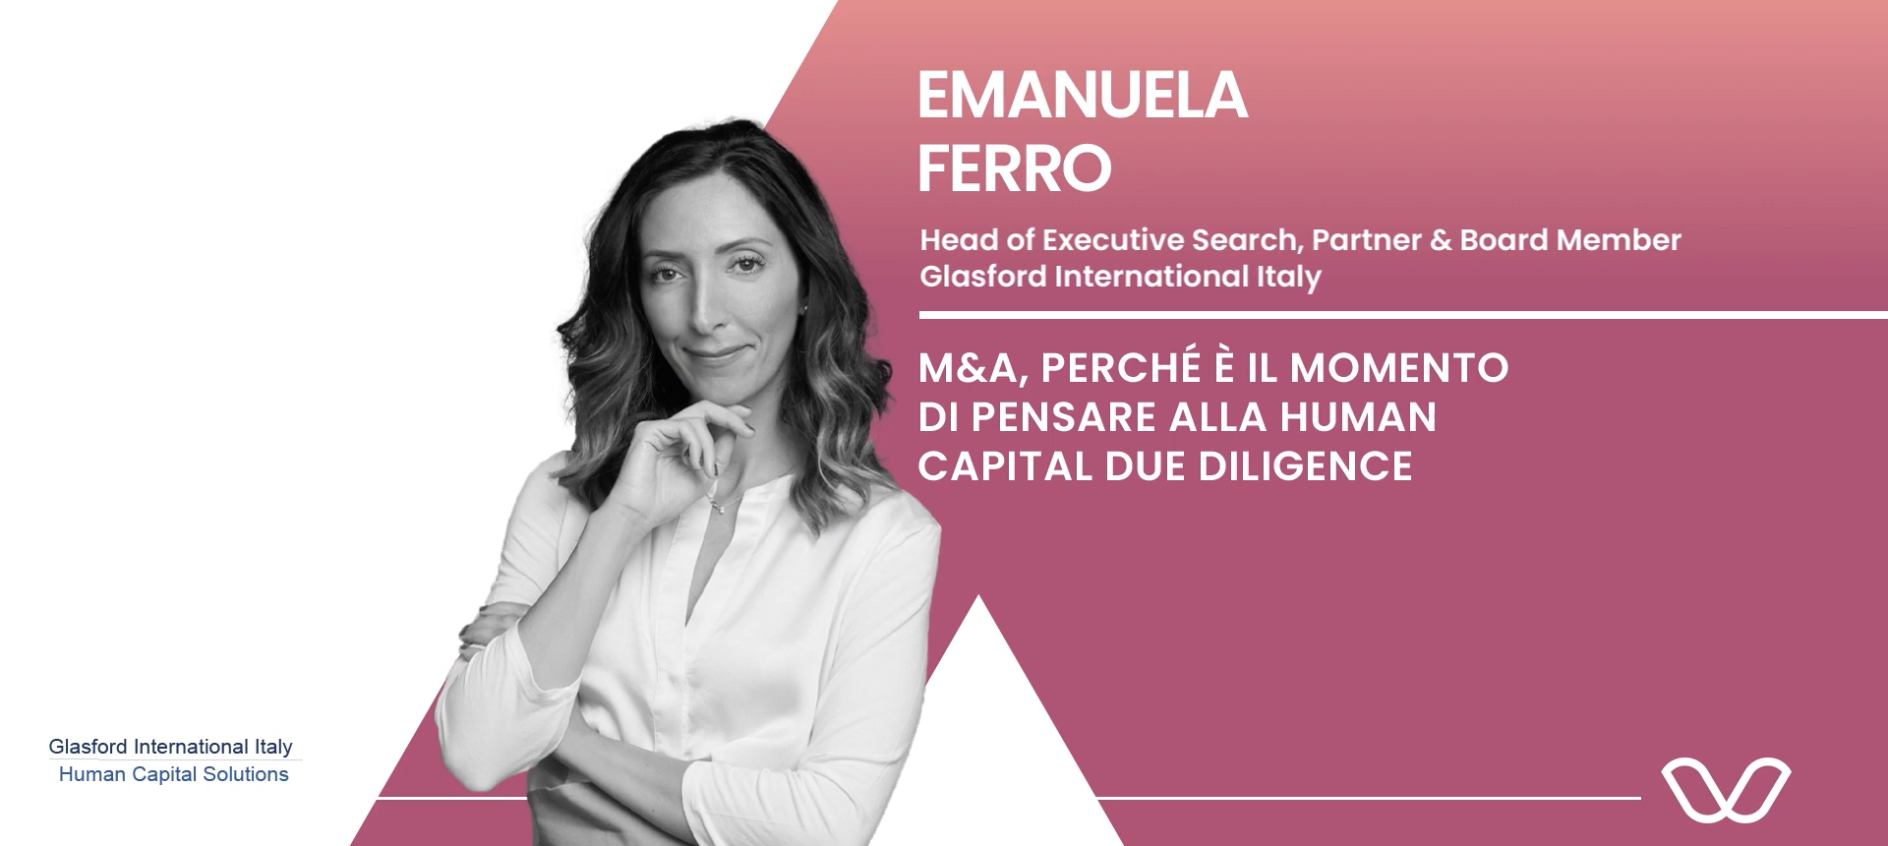 Emanuela Ferro Glasford International Italy Human Capital Due Diligence